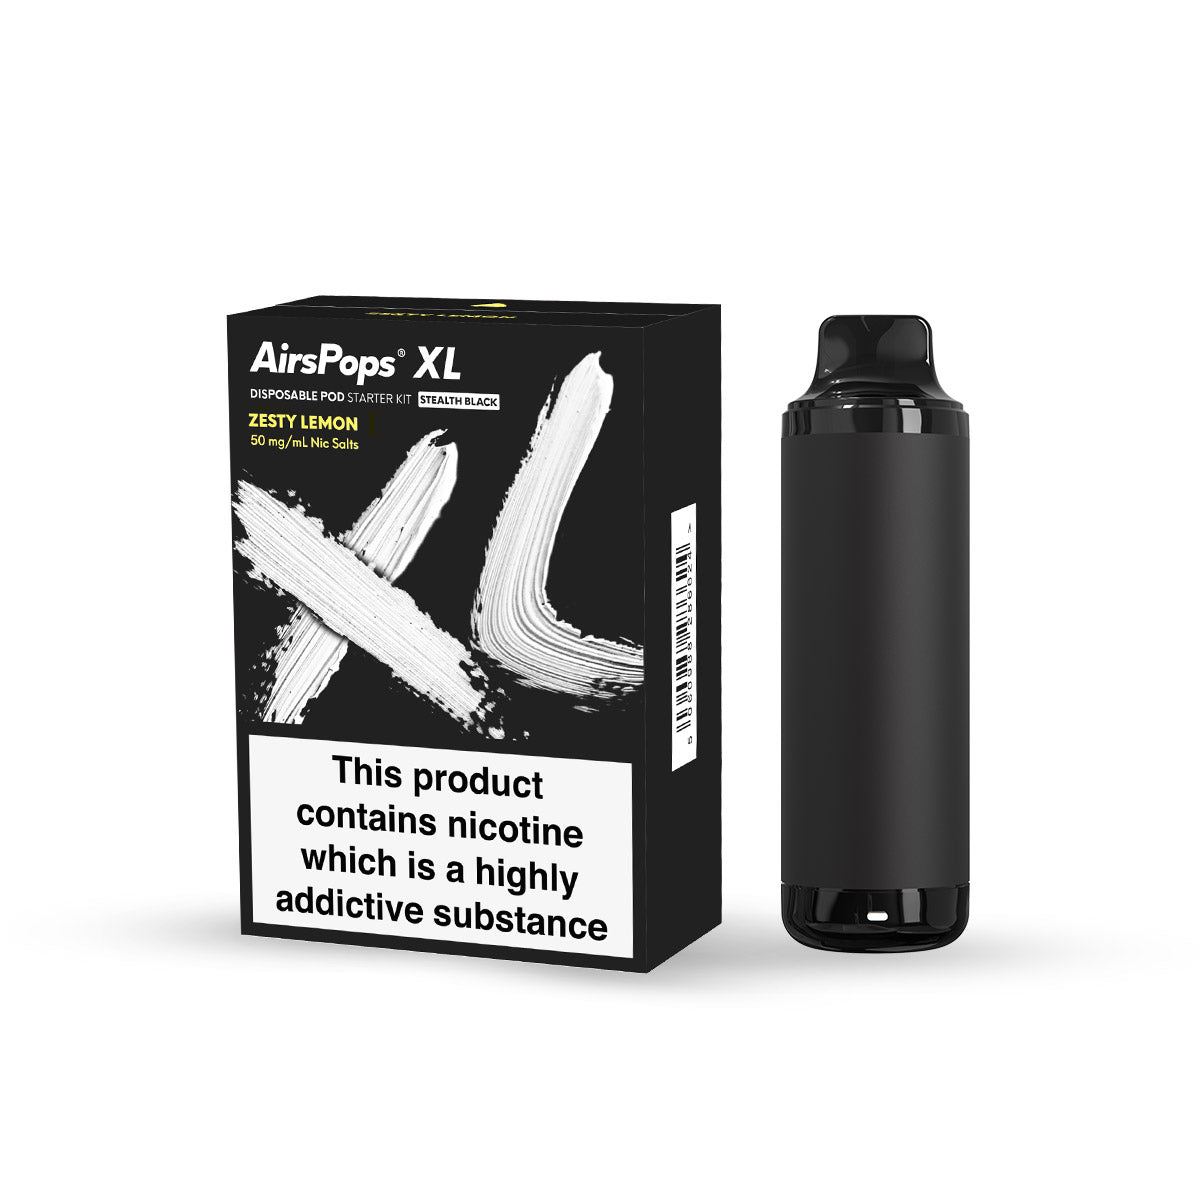 AirsPops XL - Stealth Black (Zesty Lemon)